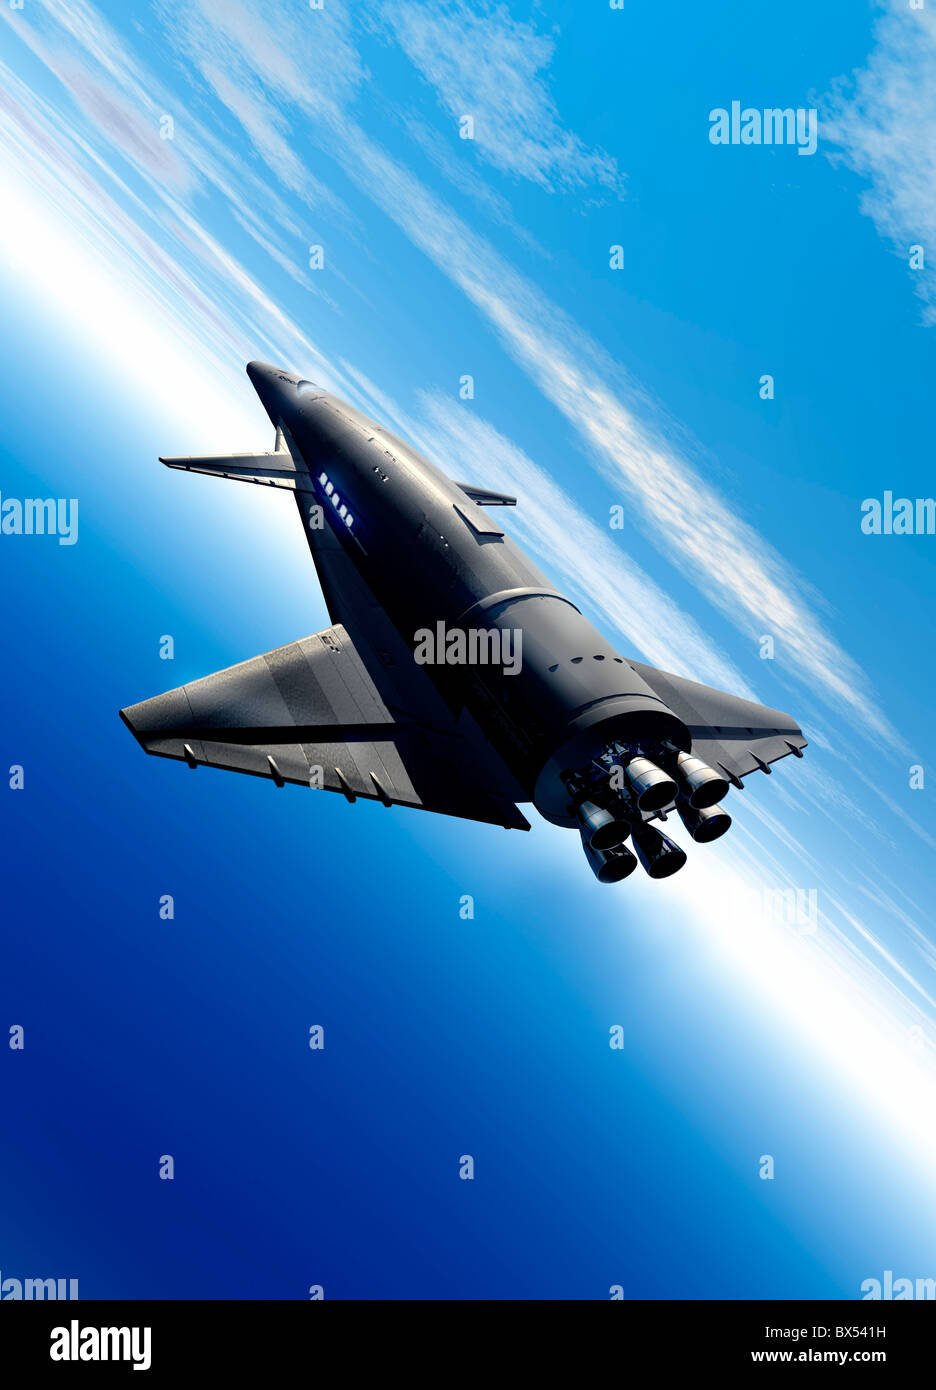 Spaceship, artwork Stock Photo